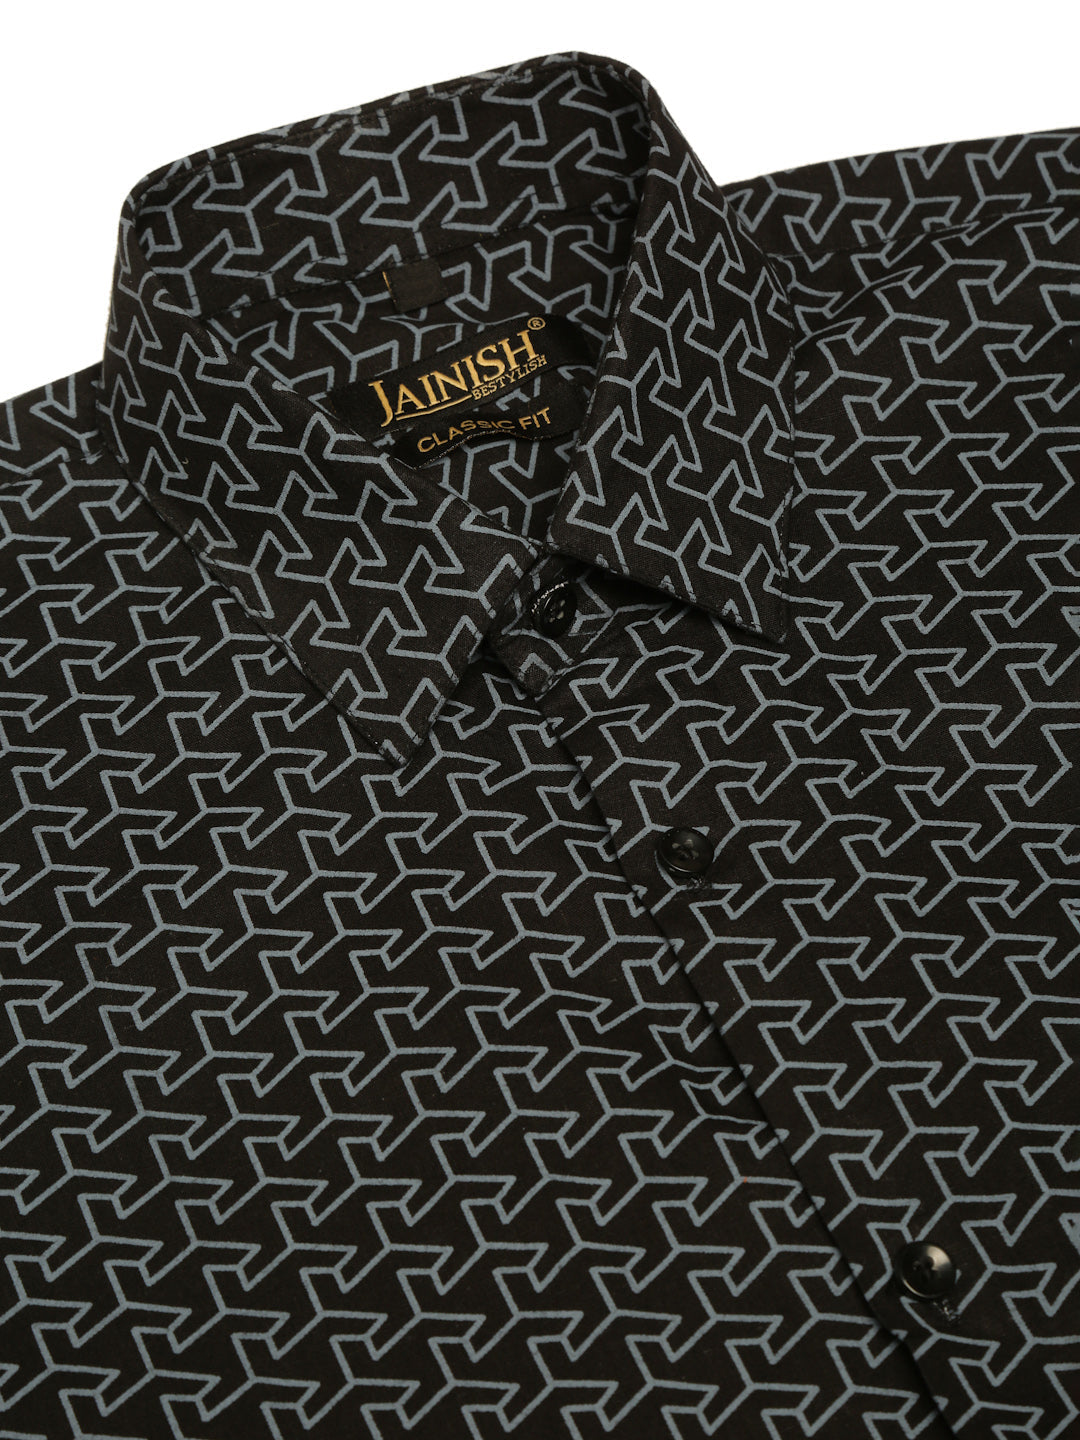 Men's  Cotton Printed Formal Shirts ( SF 821Black ) - Jainish